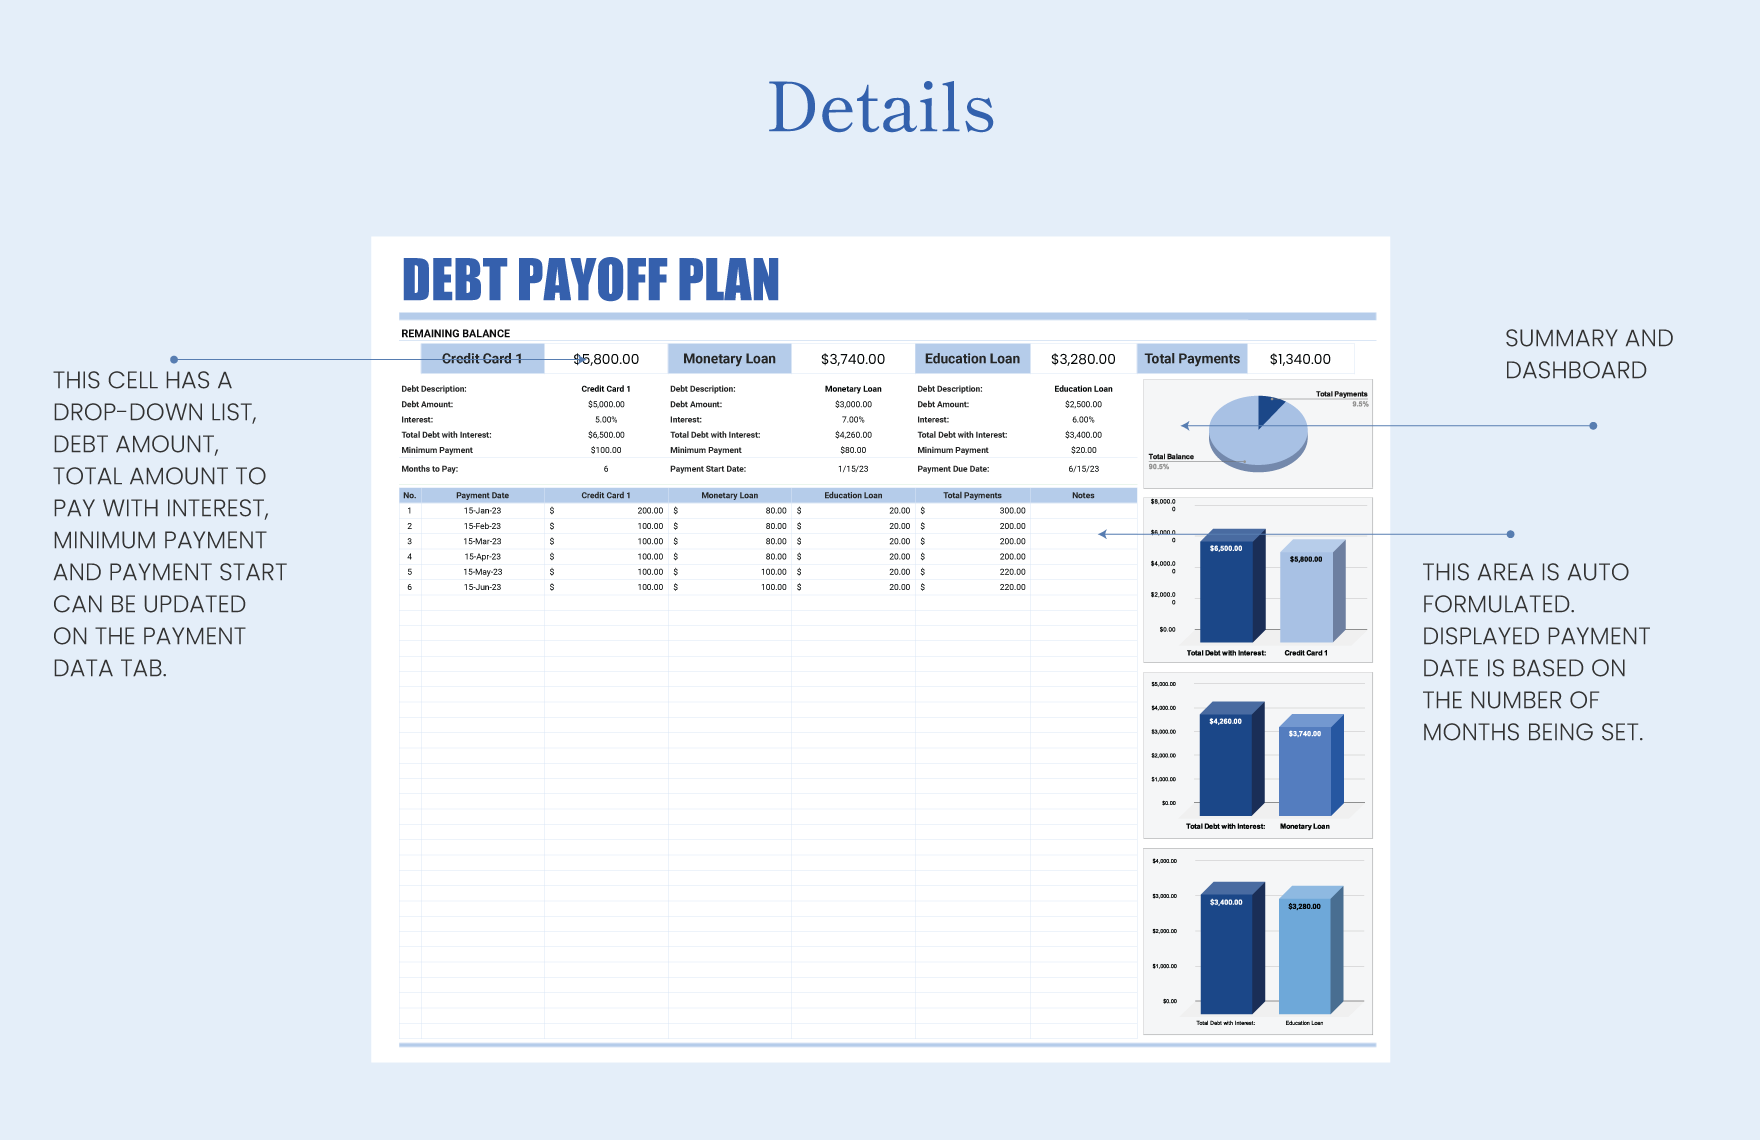 Debt Payoff Plan Template